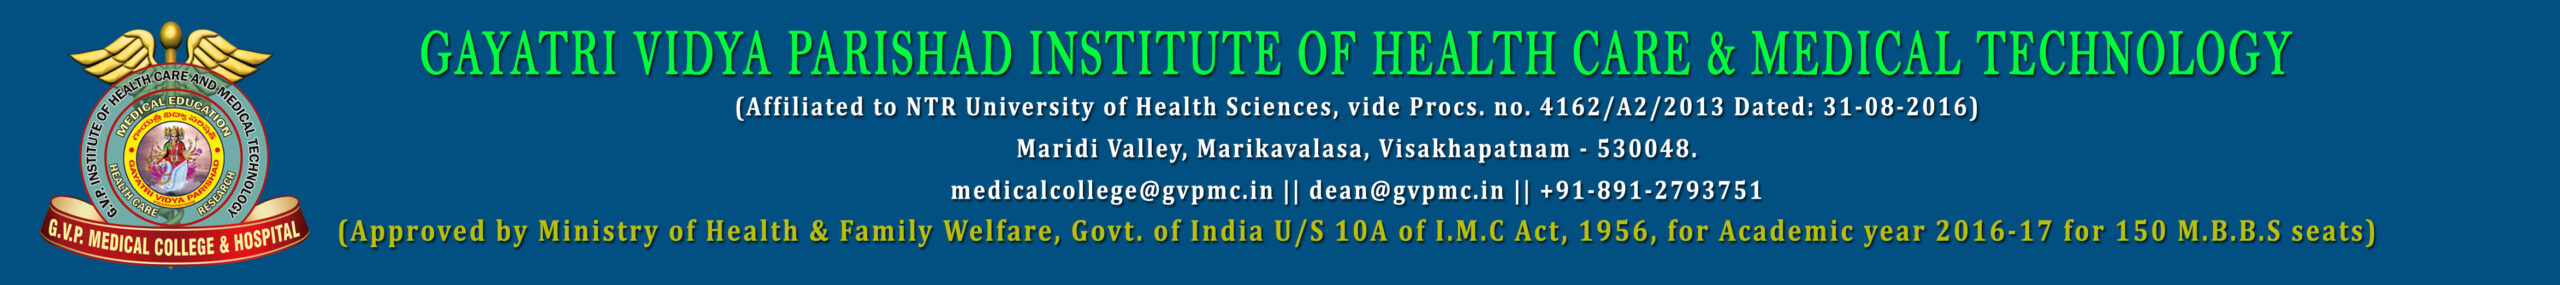 Gayathri Vidya Parishad Institute of Health Care & Medical Technology, Visakhapatnam